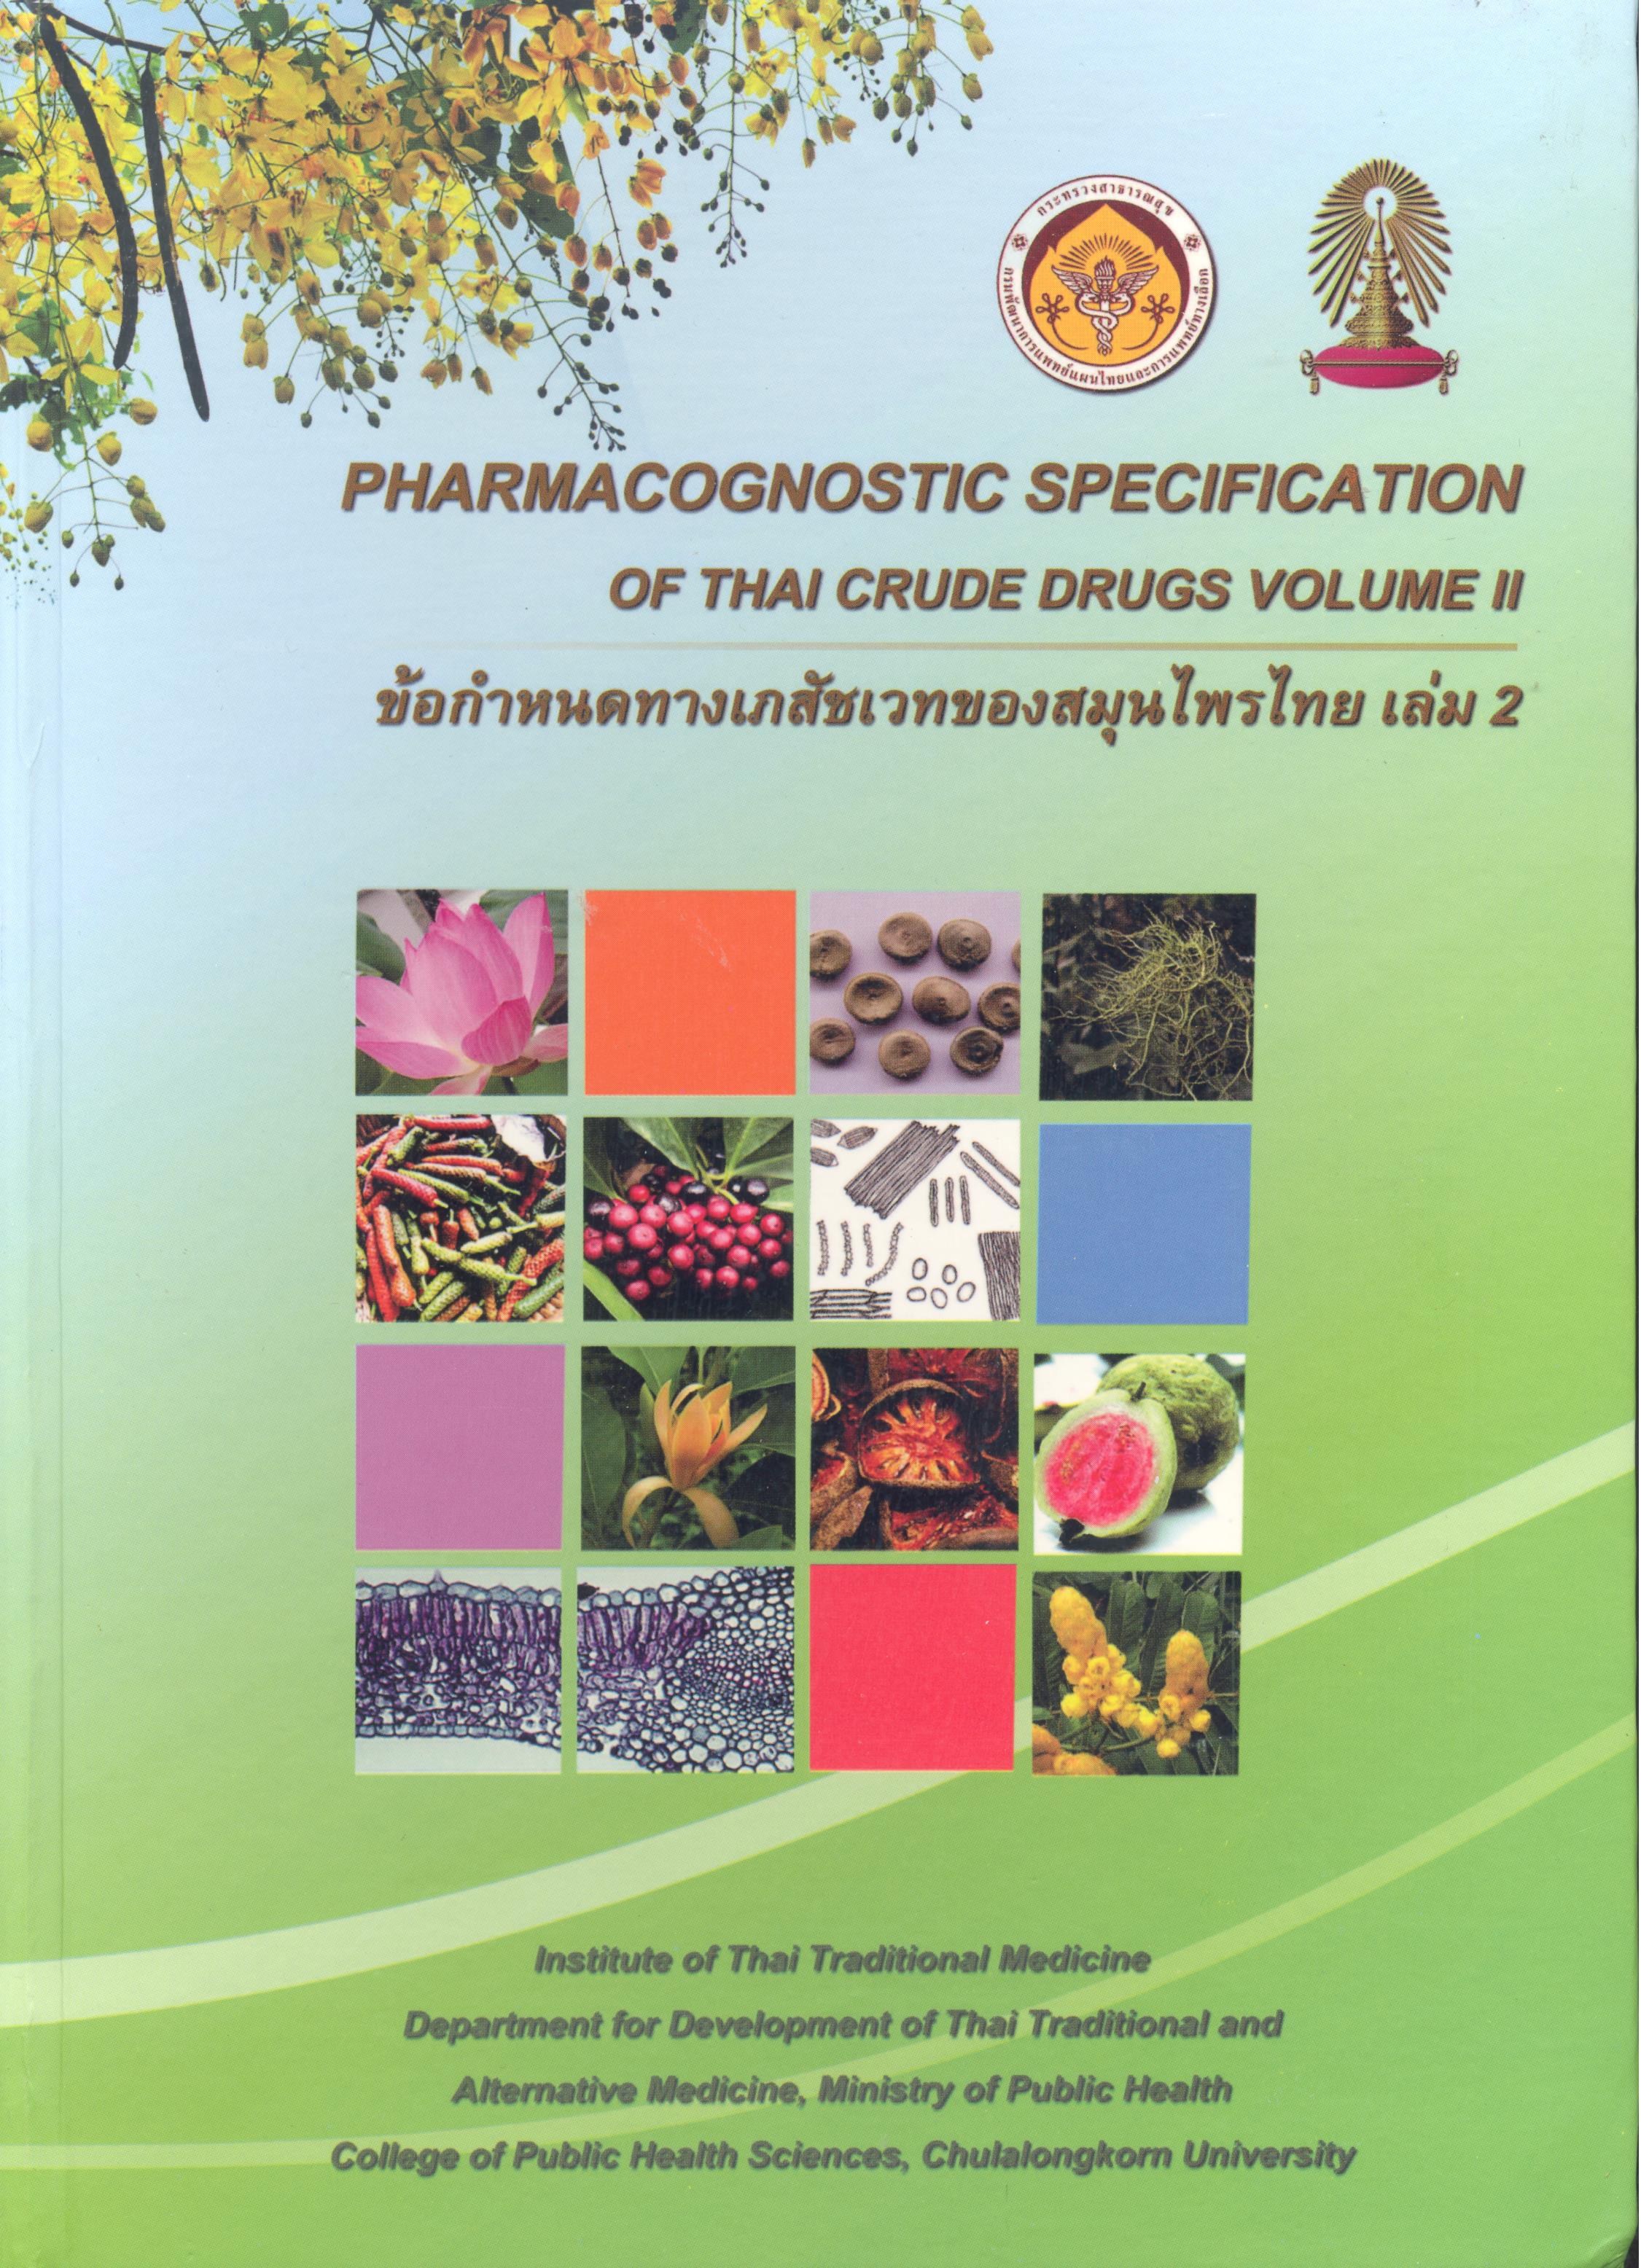 Pharmacognostic specification of Thai crude drugs